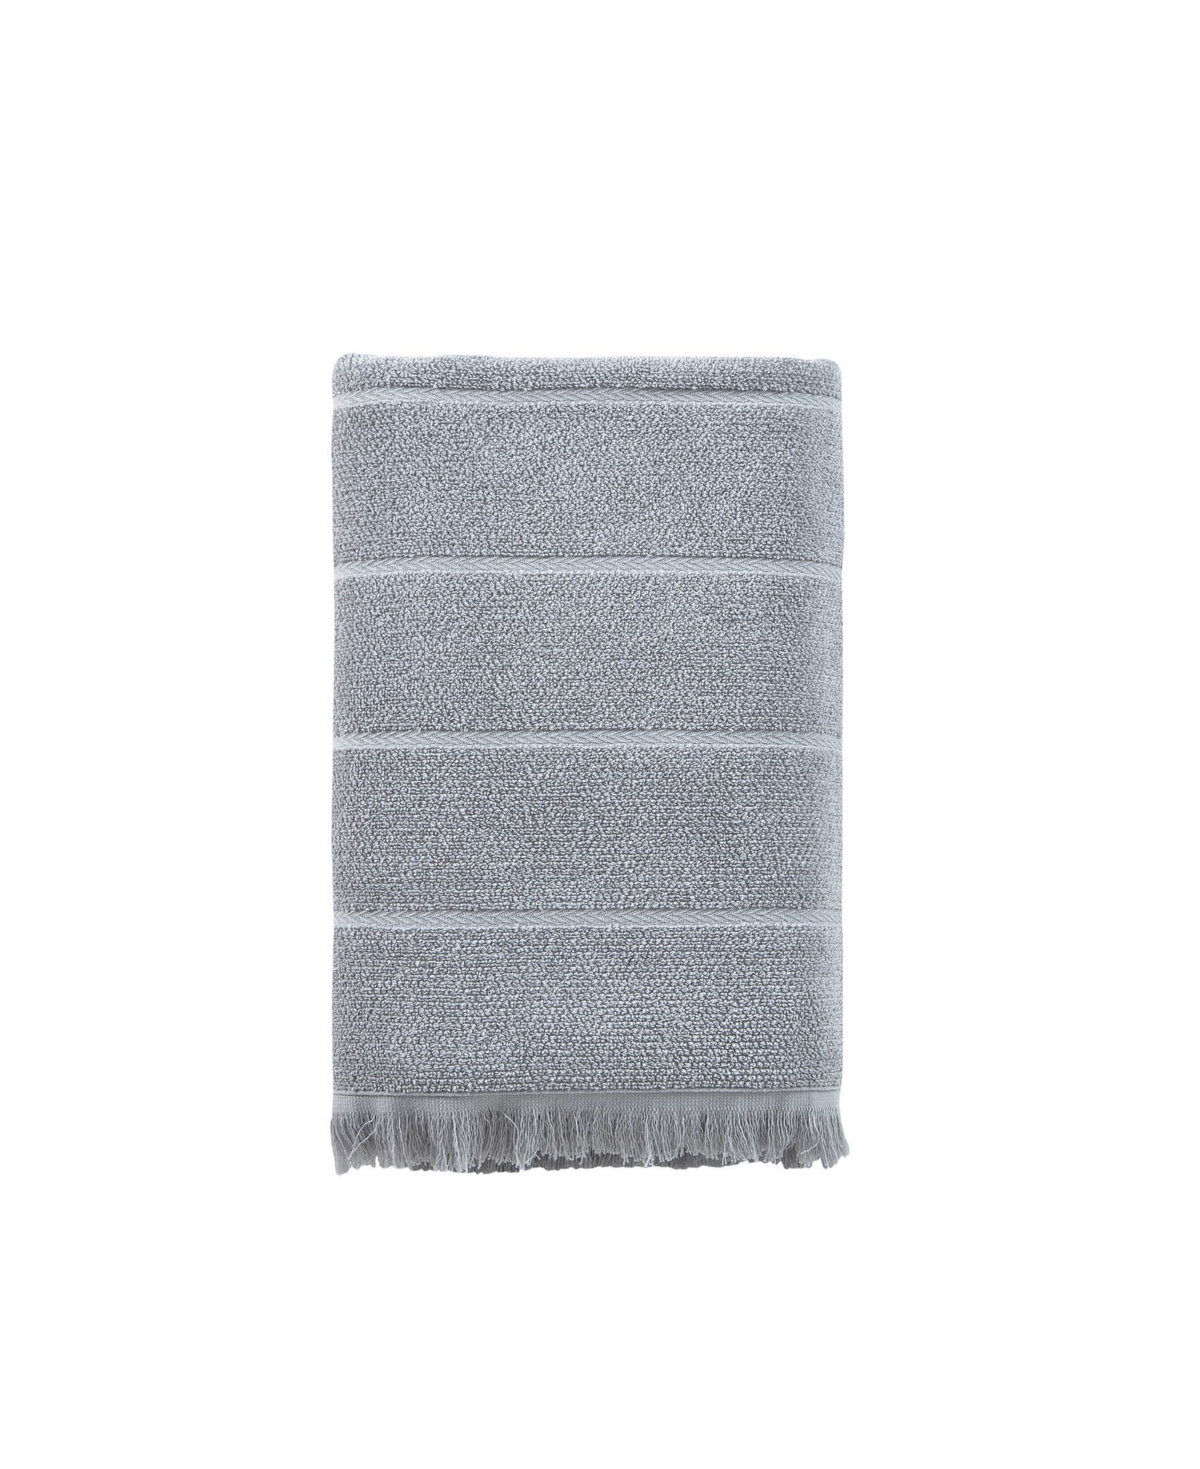 Ozan Premium Home Mirage Collection 54" X 27" Turkish Cotton Luxury Bath Towel In Taupe